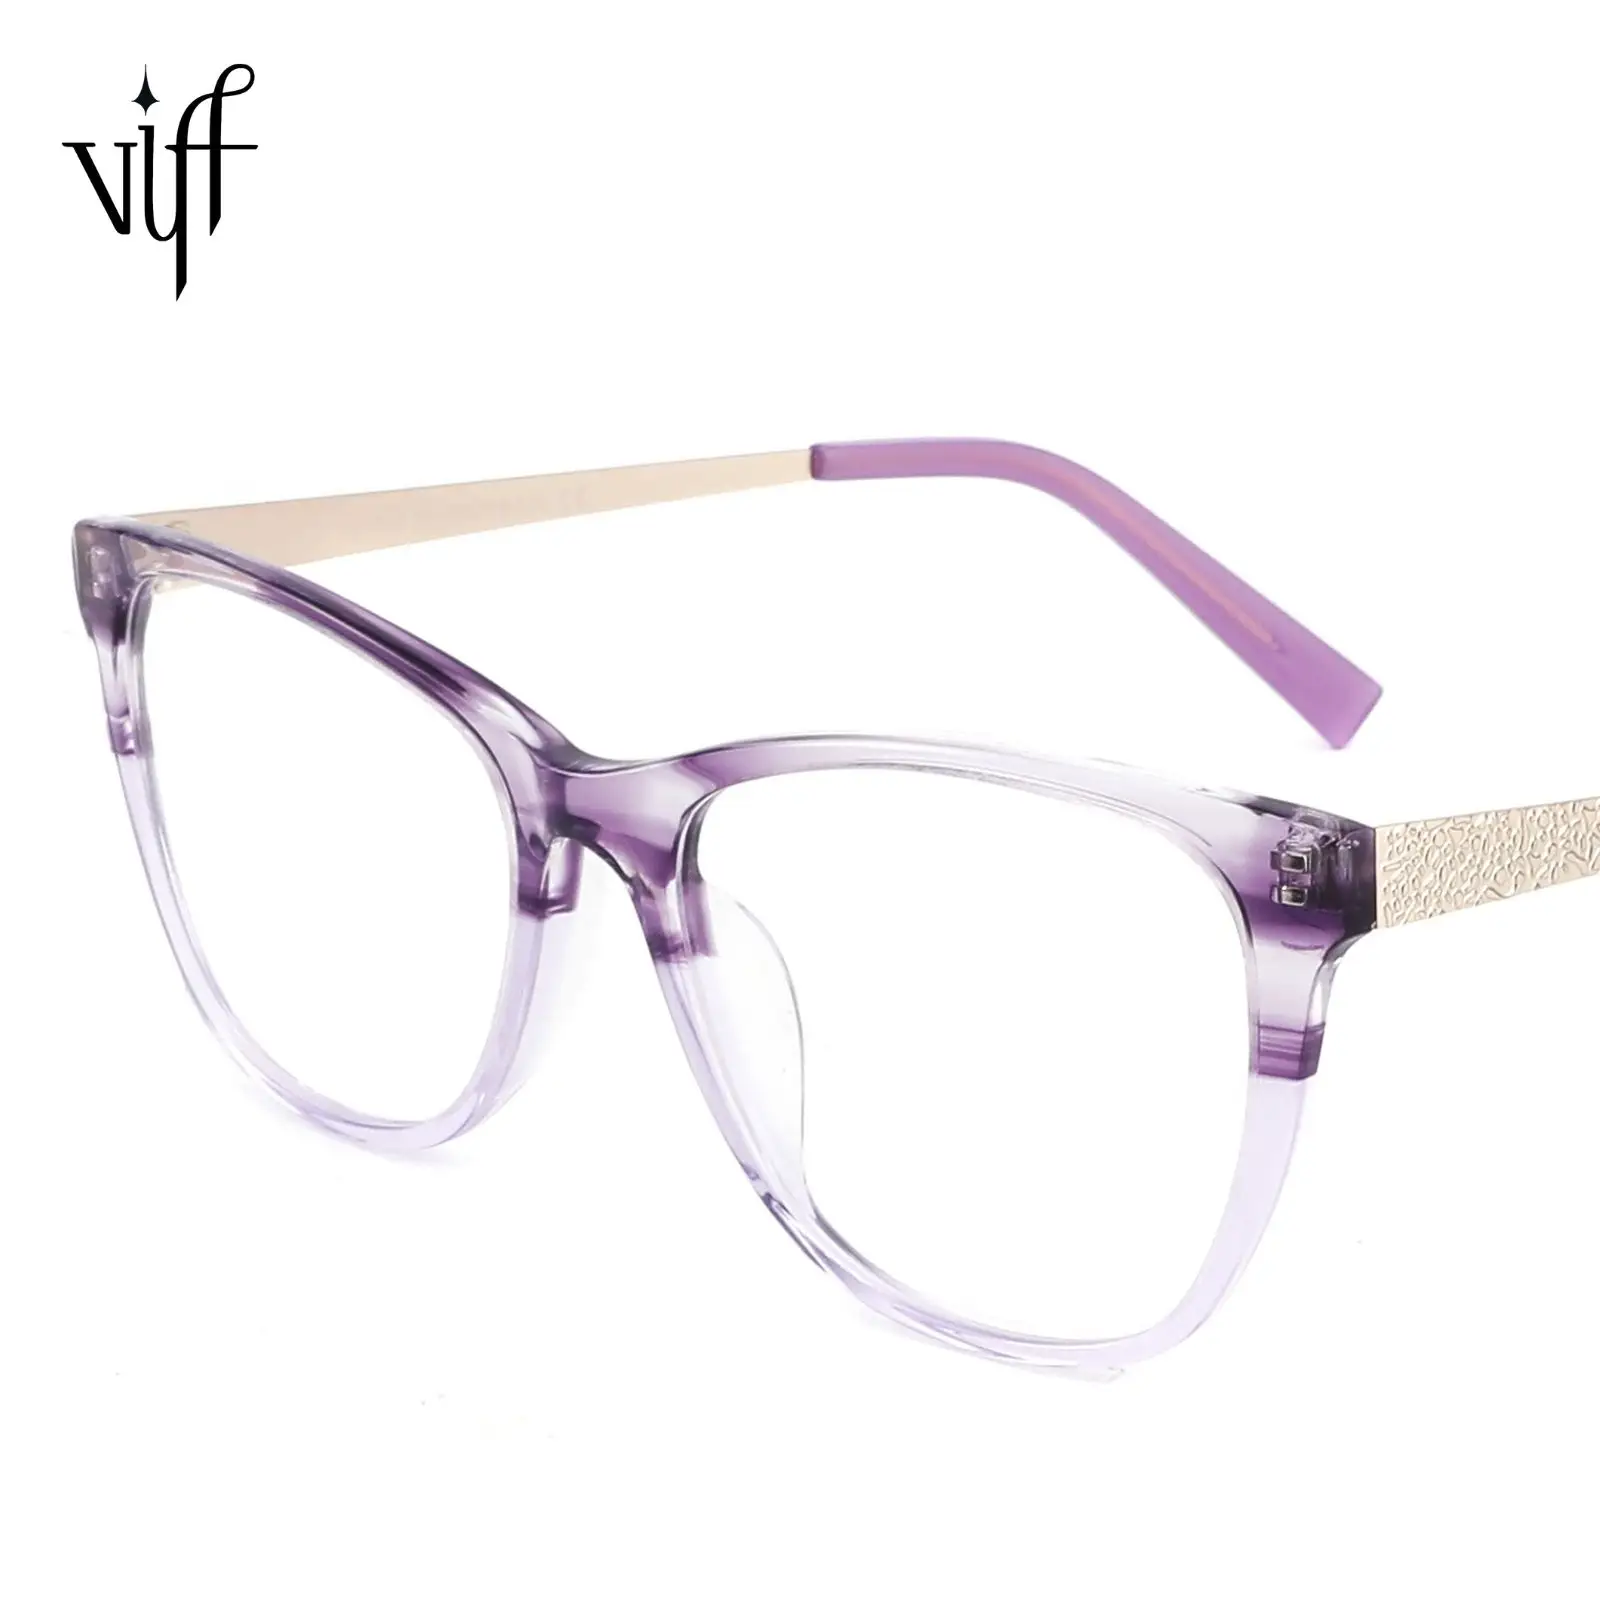 VIFF HA1027 Factory Price Latest Stylish Men Women Acetate Frame Degree Of Glasses Adjustable Fancy Frames Reading Glasses